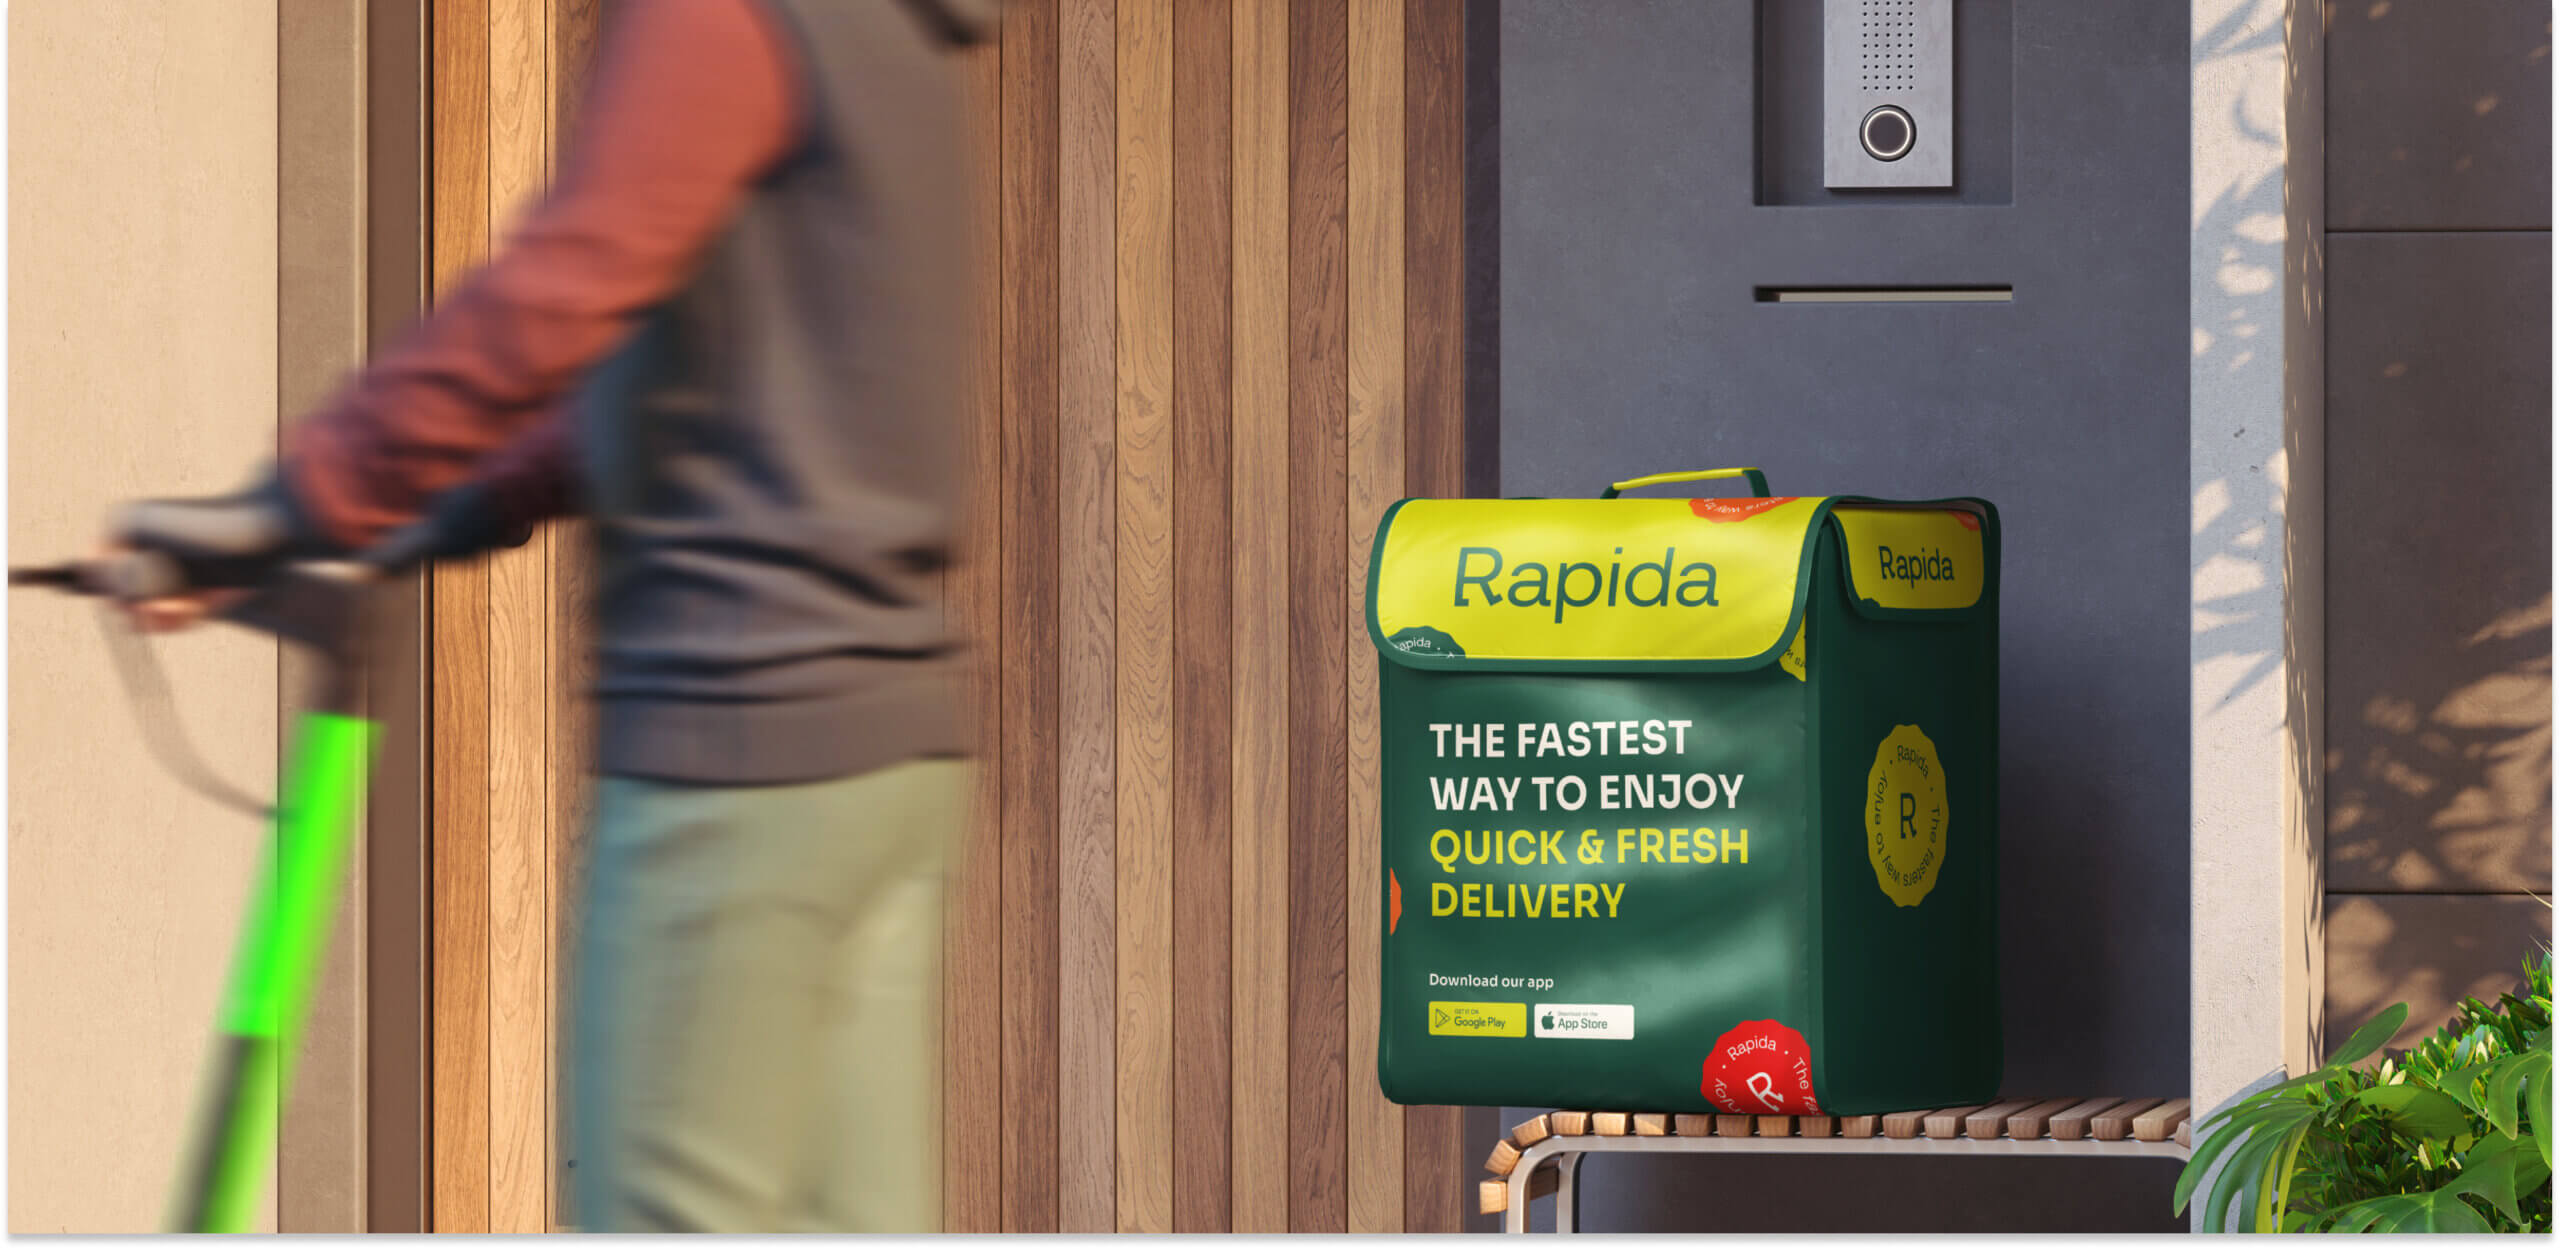 Rapida – Branding for the Delivery Service - Website Development - Photo 1